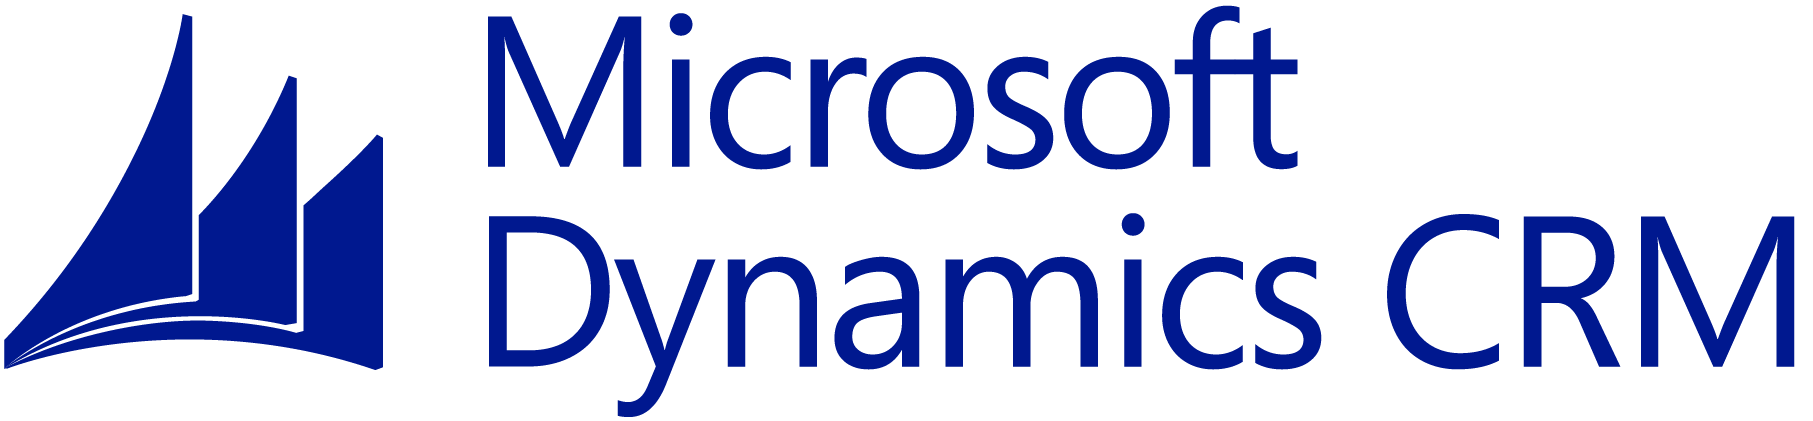 microsoft dynamics-logo